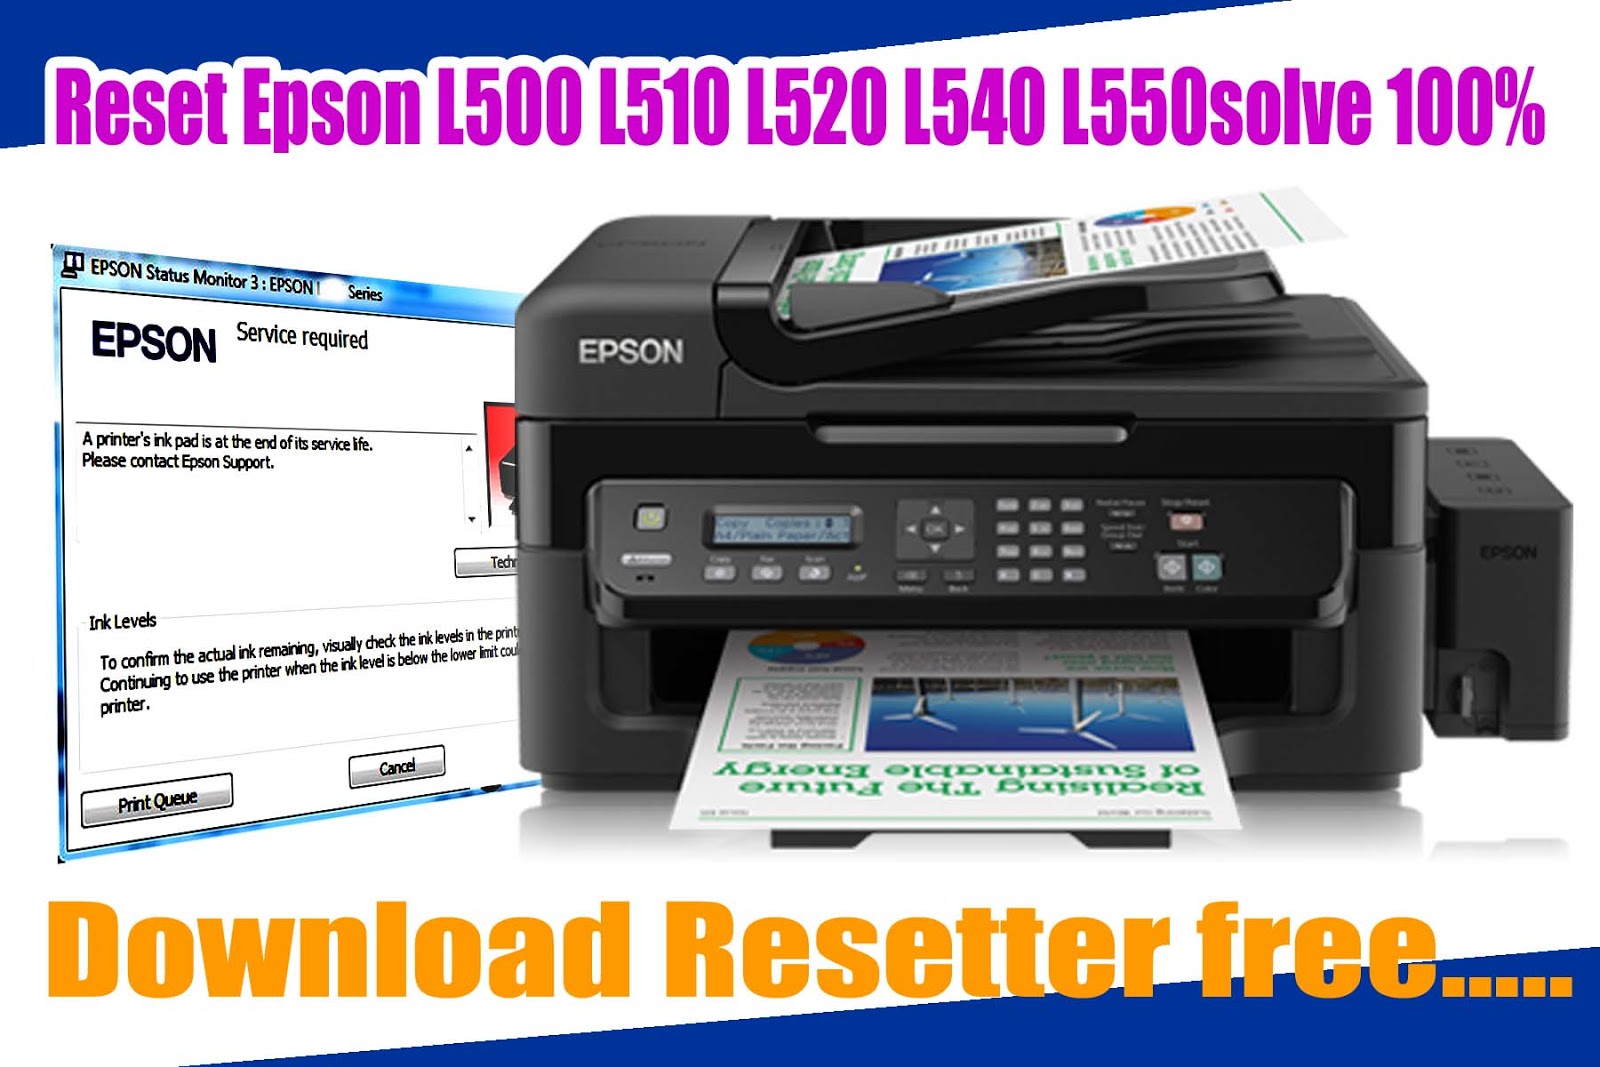 download-epson-l500-l510-l520-l540-l550-resetter-free-epson